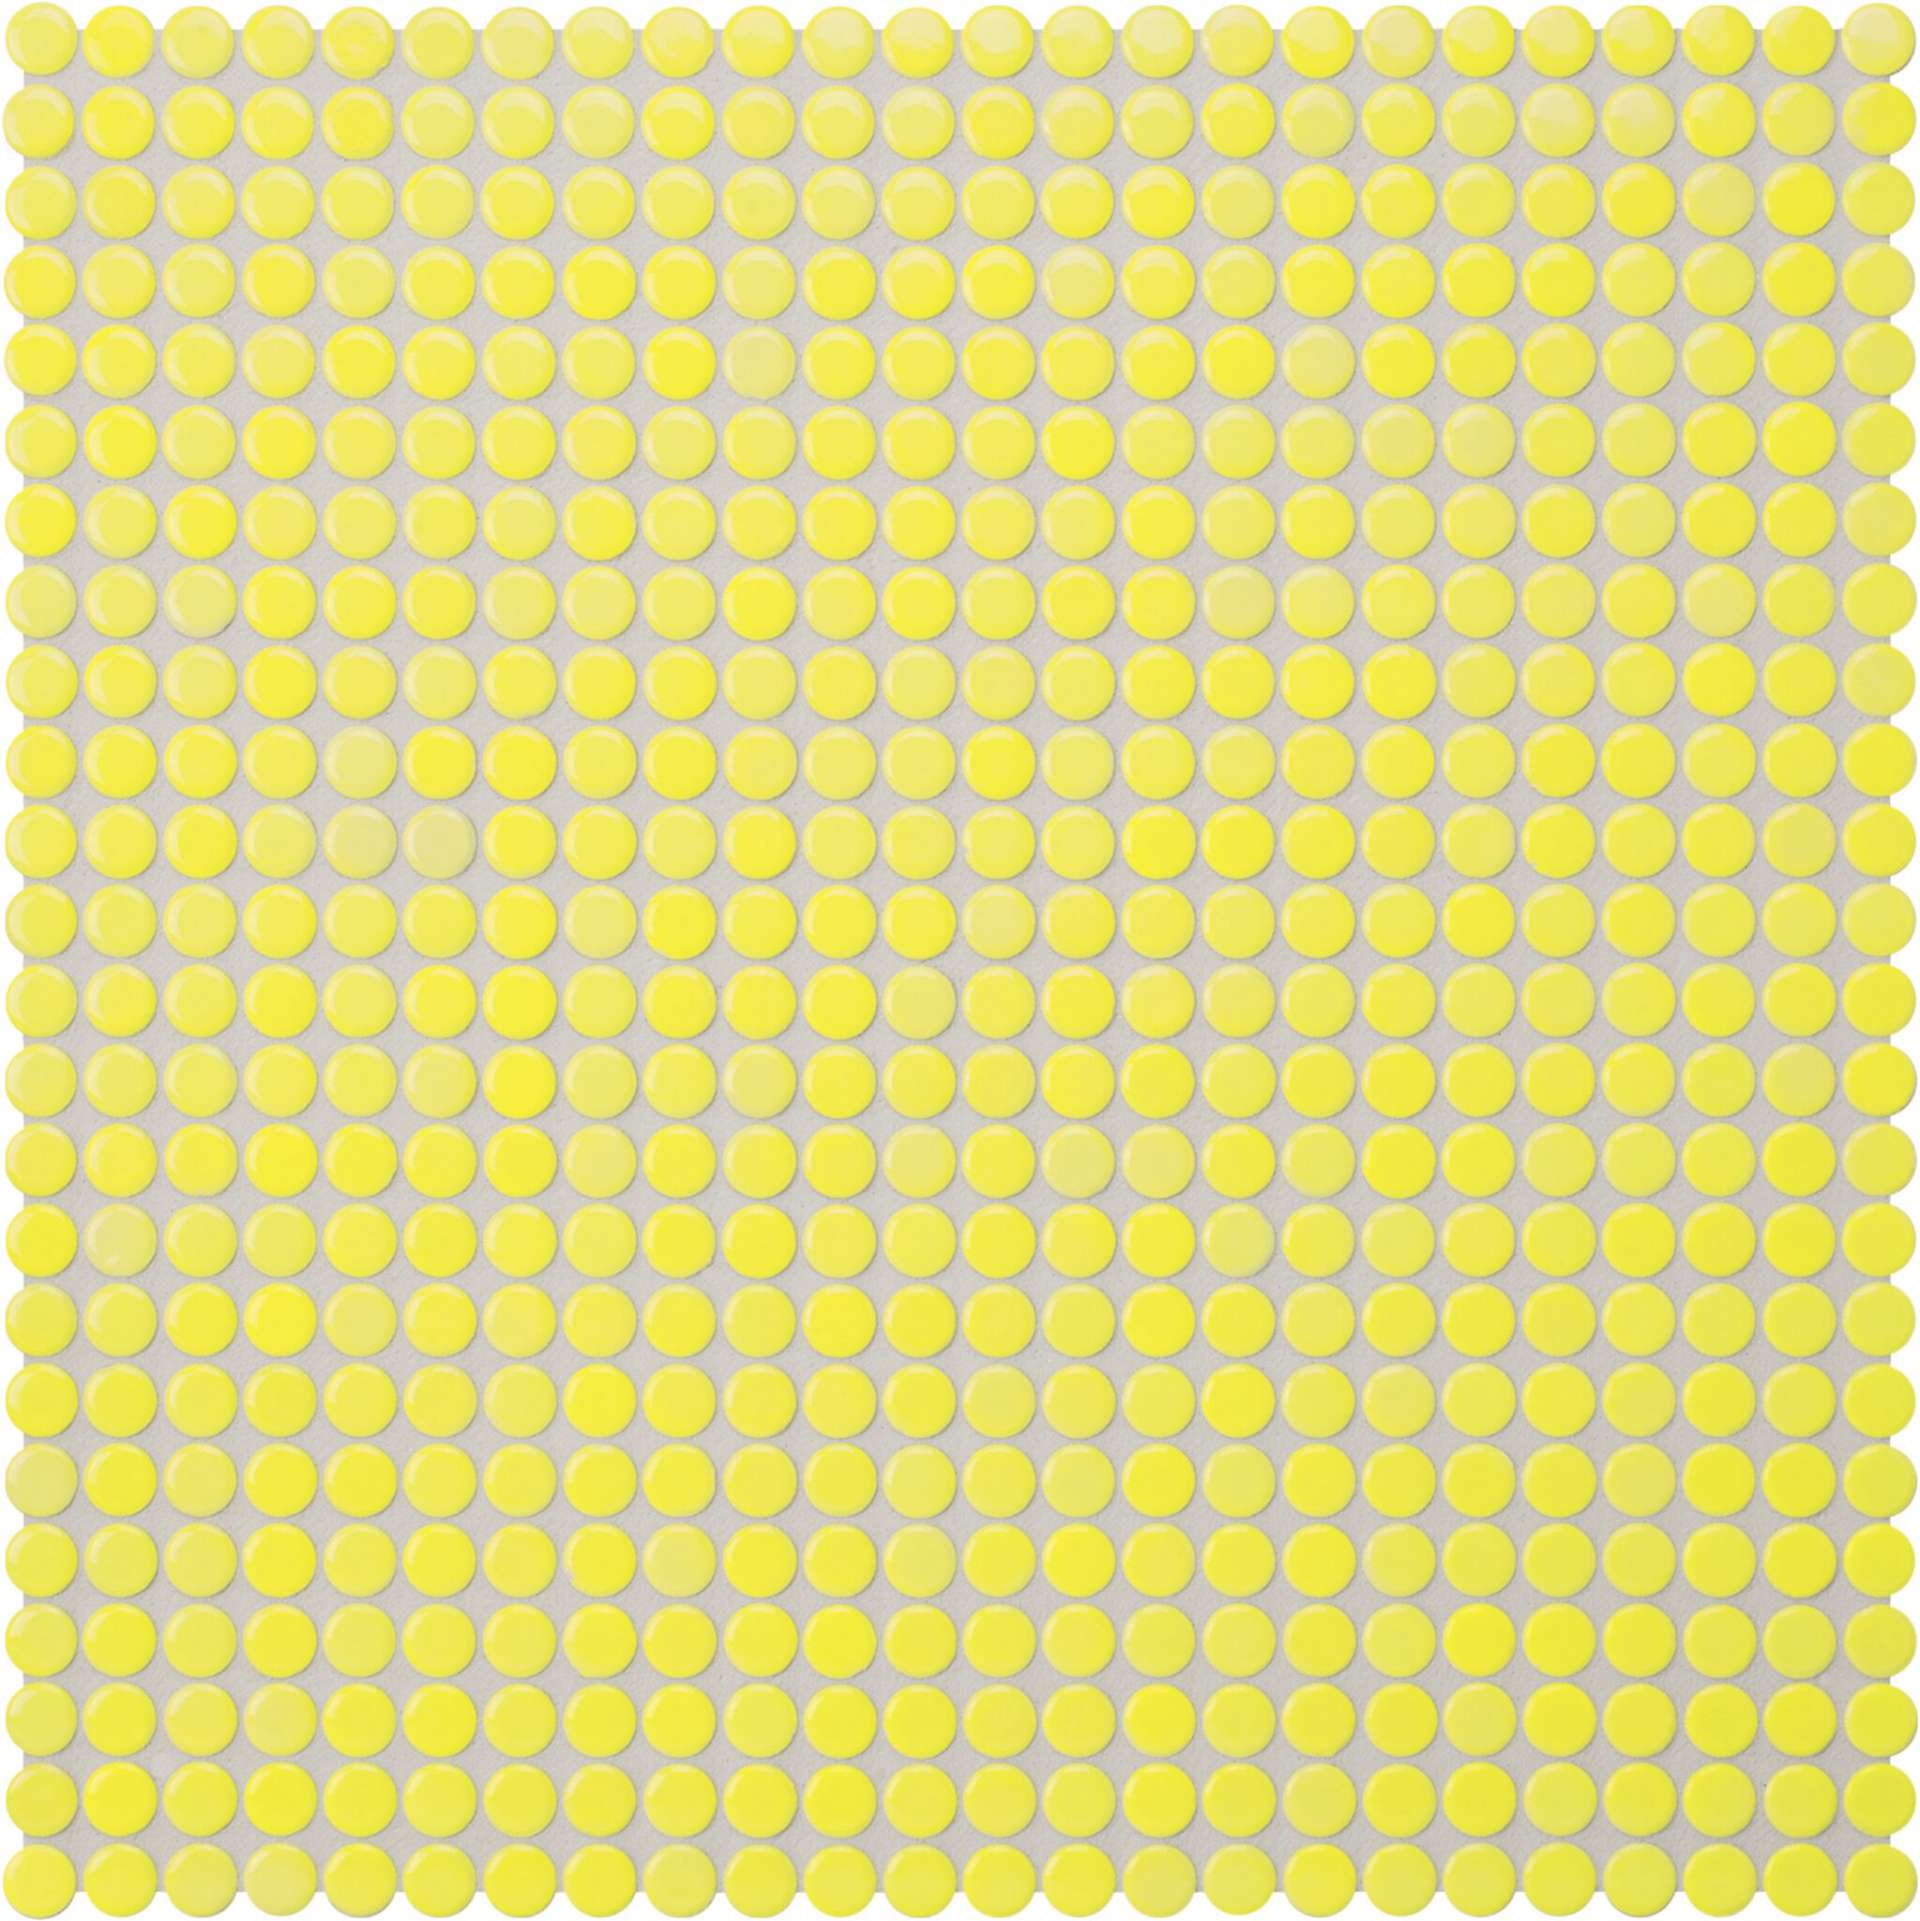 Мозаика Jasba Loop Zitronengelb 40013H-44, цвет жёлтый, поверхность глянцевая, круг и овал, 316x316